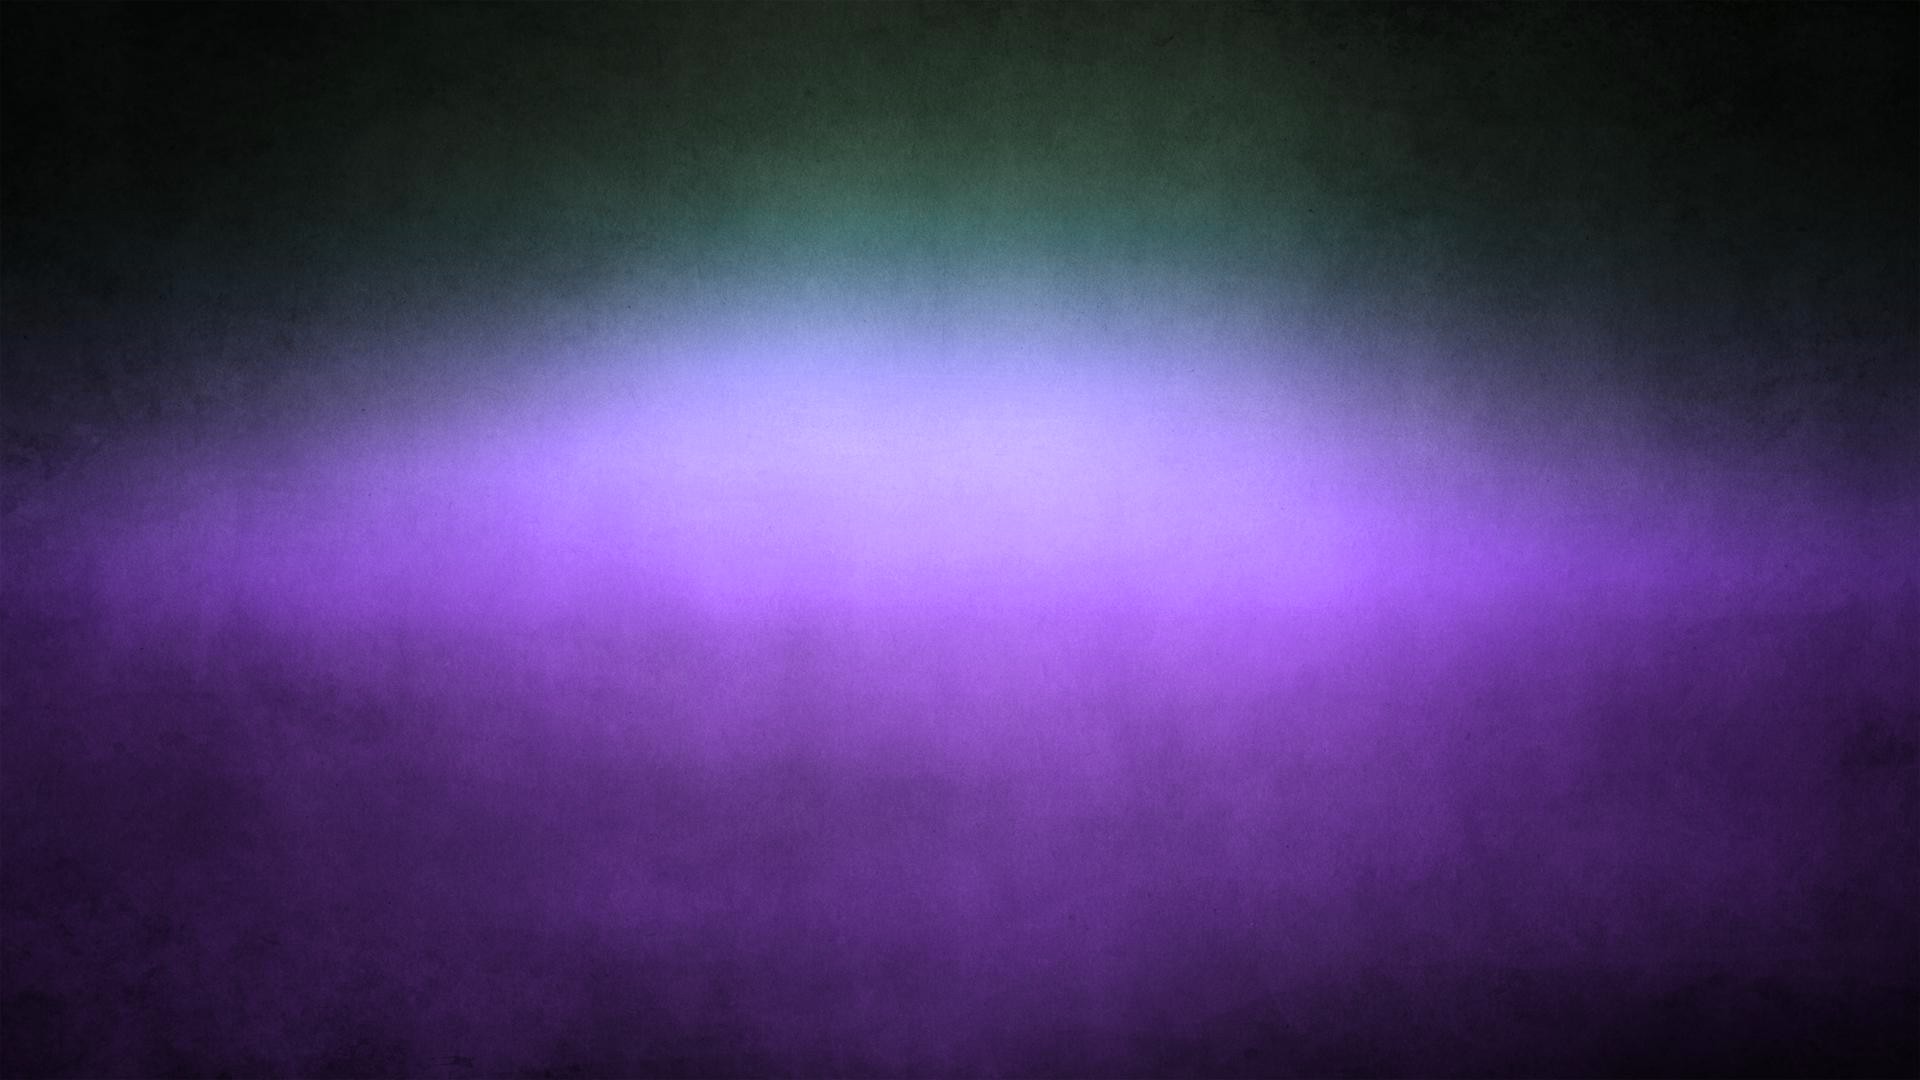  comwallsabstractiongreen and purple gradient on your desktopjpg